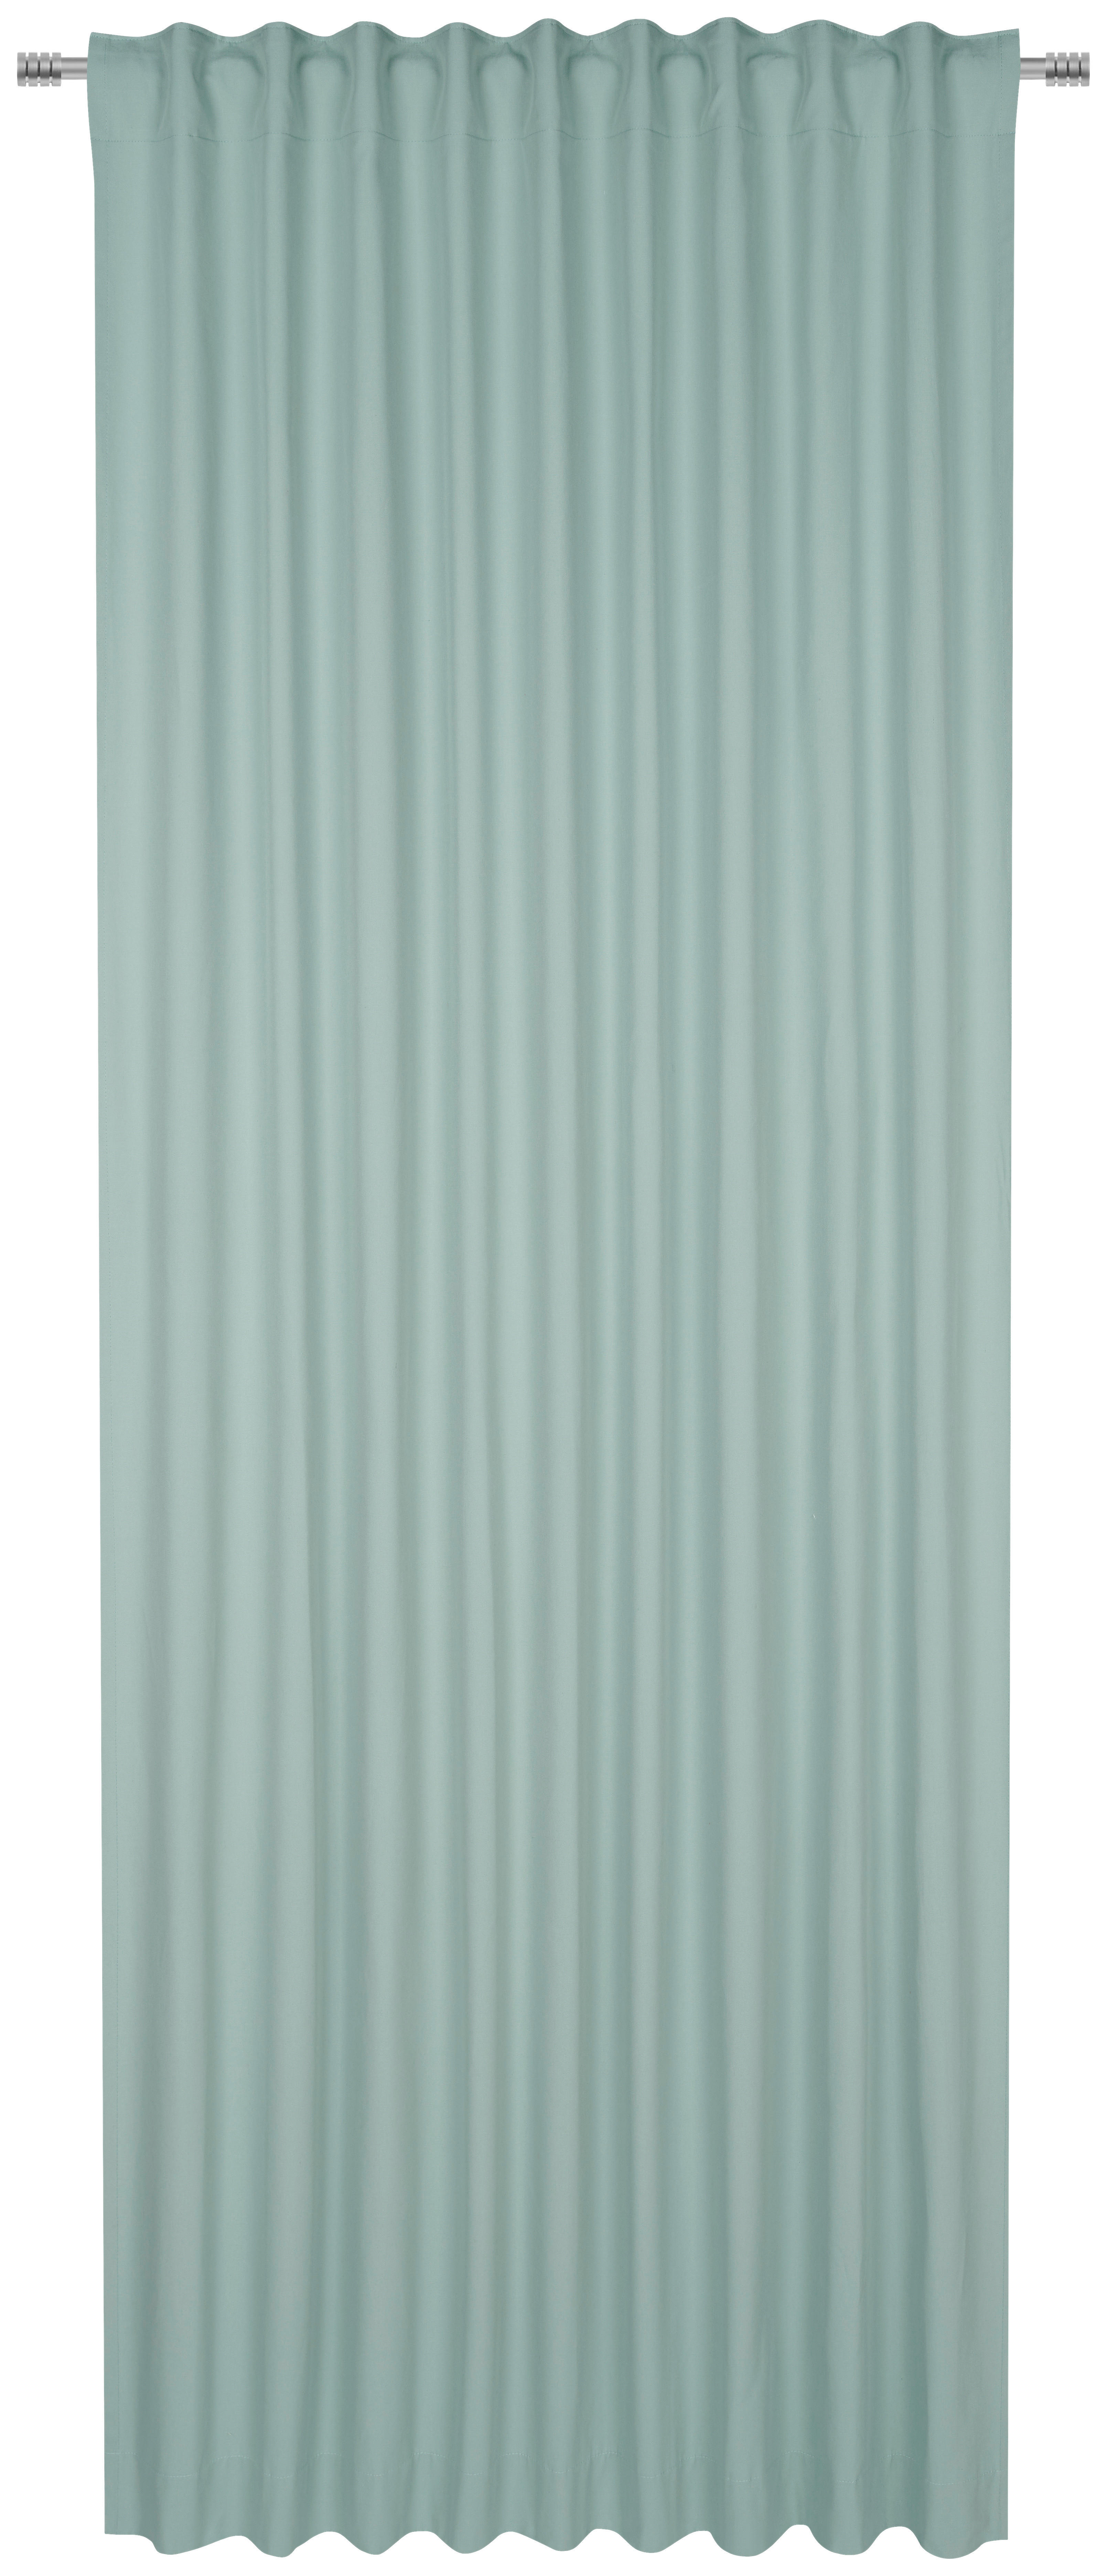 FERTIGVORHANG MERLE blickdicht 140/255 cm   - Jadegrün, Basics, Textil (140/255cm) - Bio:Vio